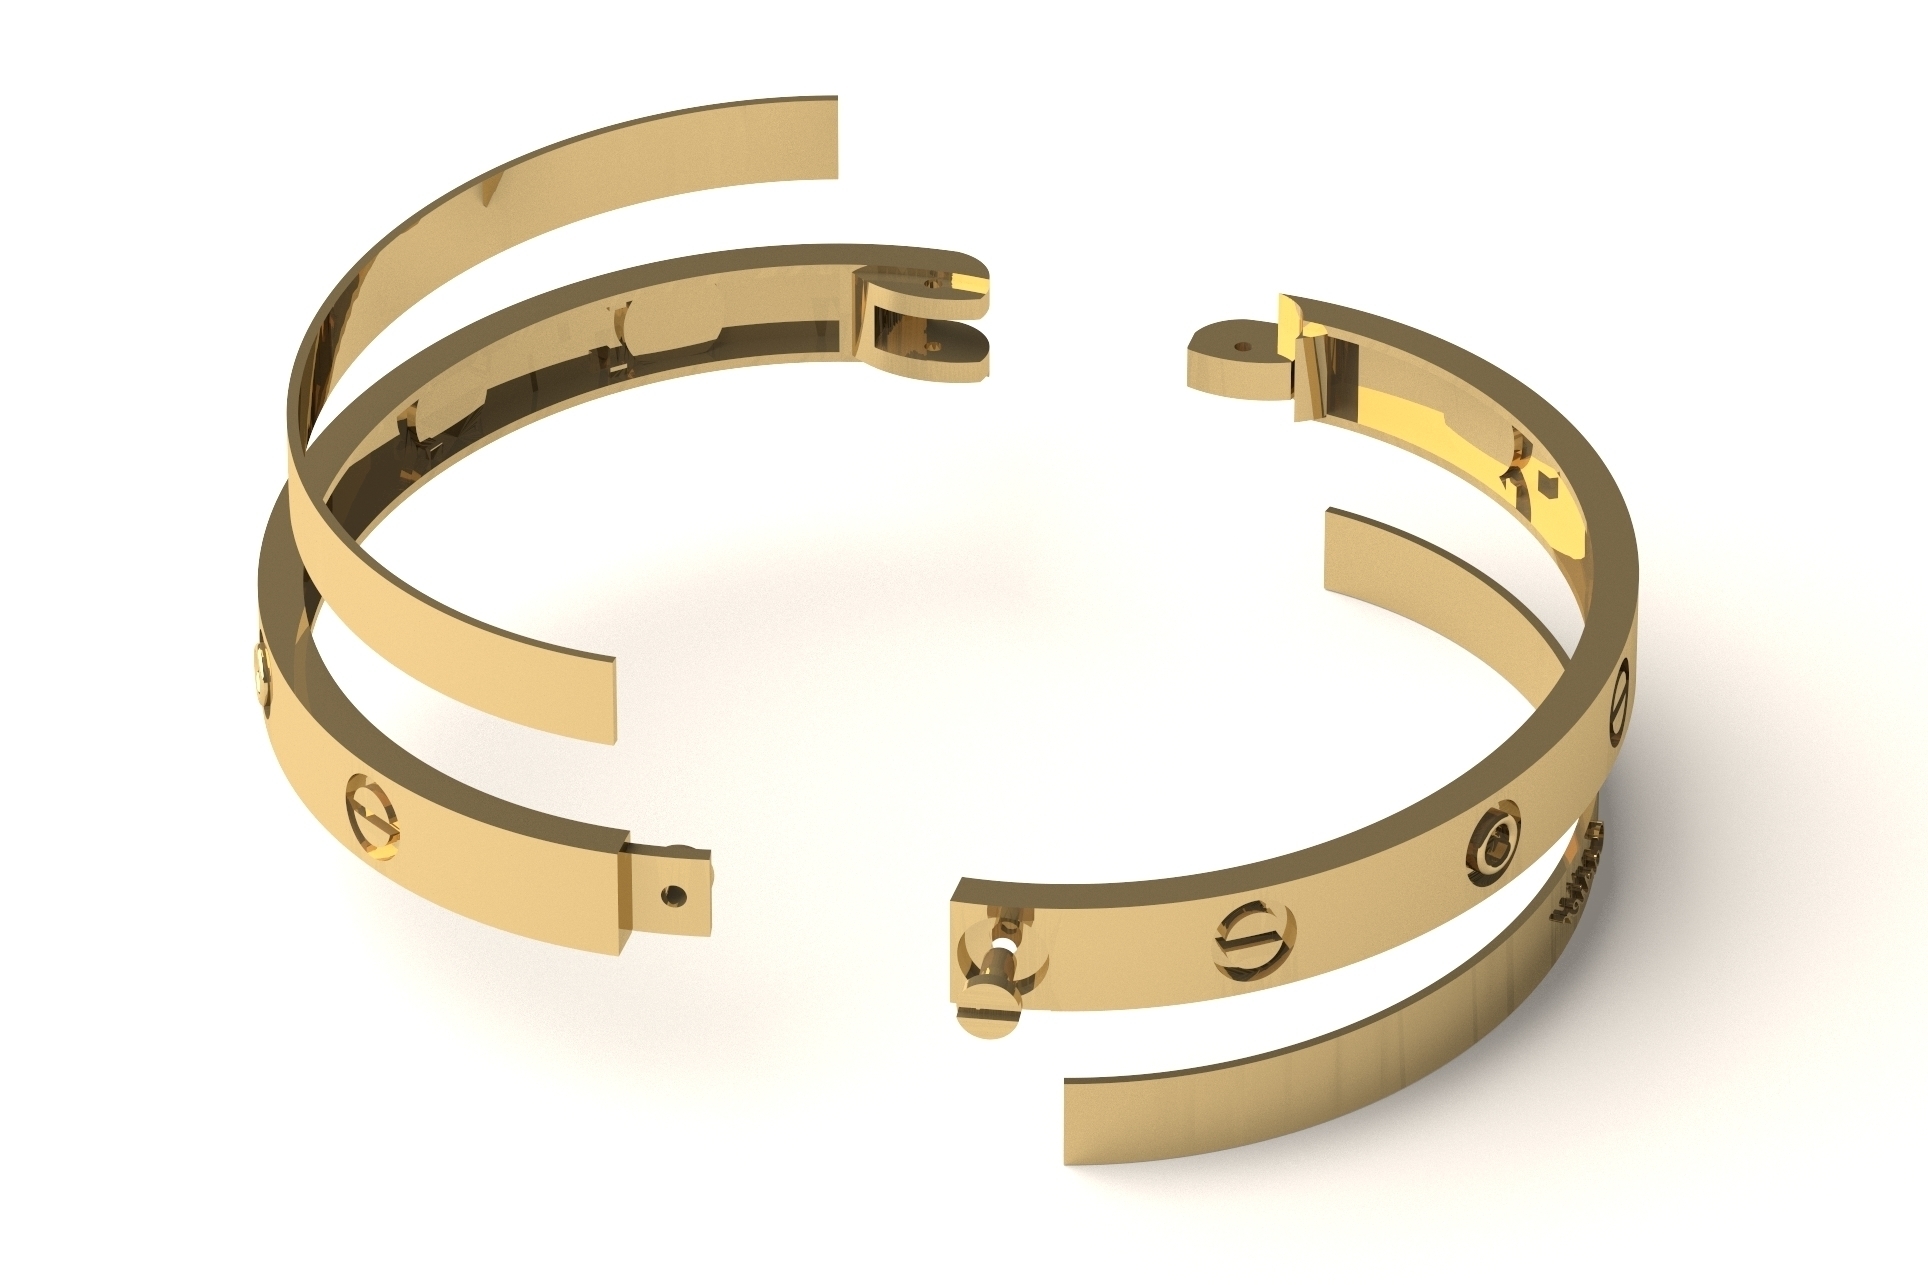 Leather bracelet 3D Model $10 - .max .3ds .fbx .obj - Free3D